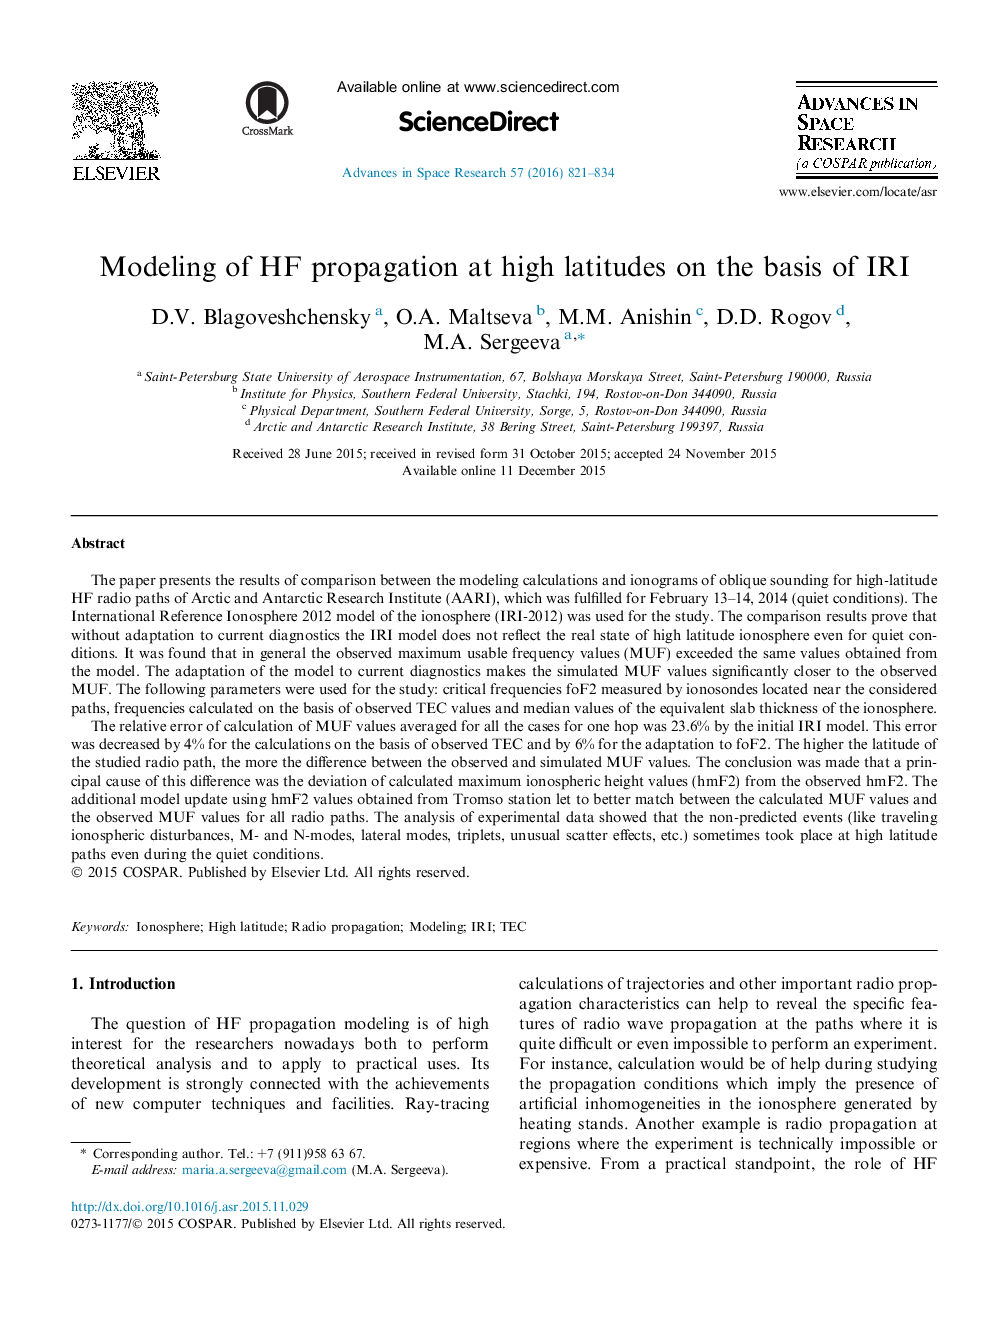 Modeling of HF propagation at high latitudes on the basis of IRI